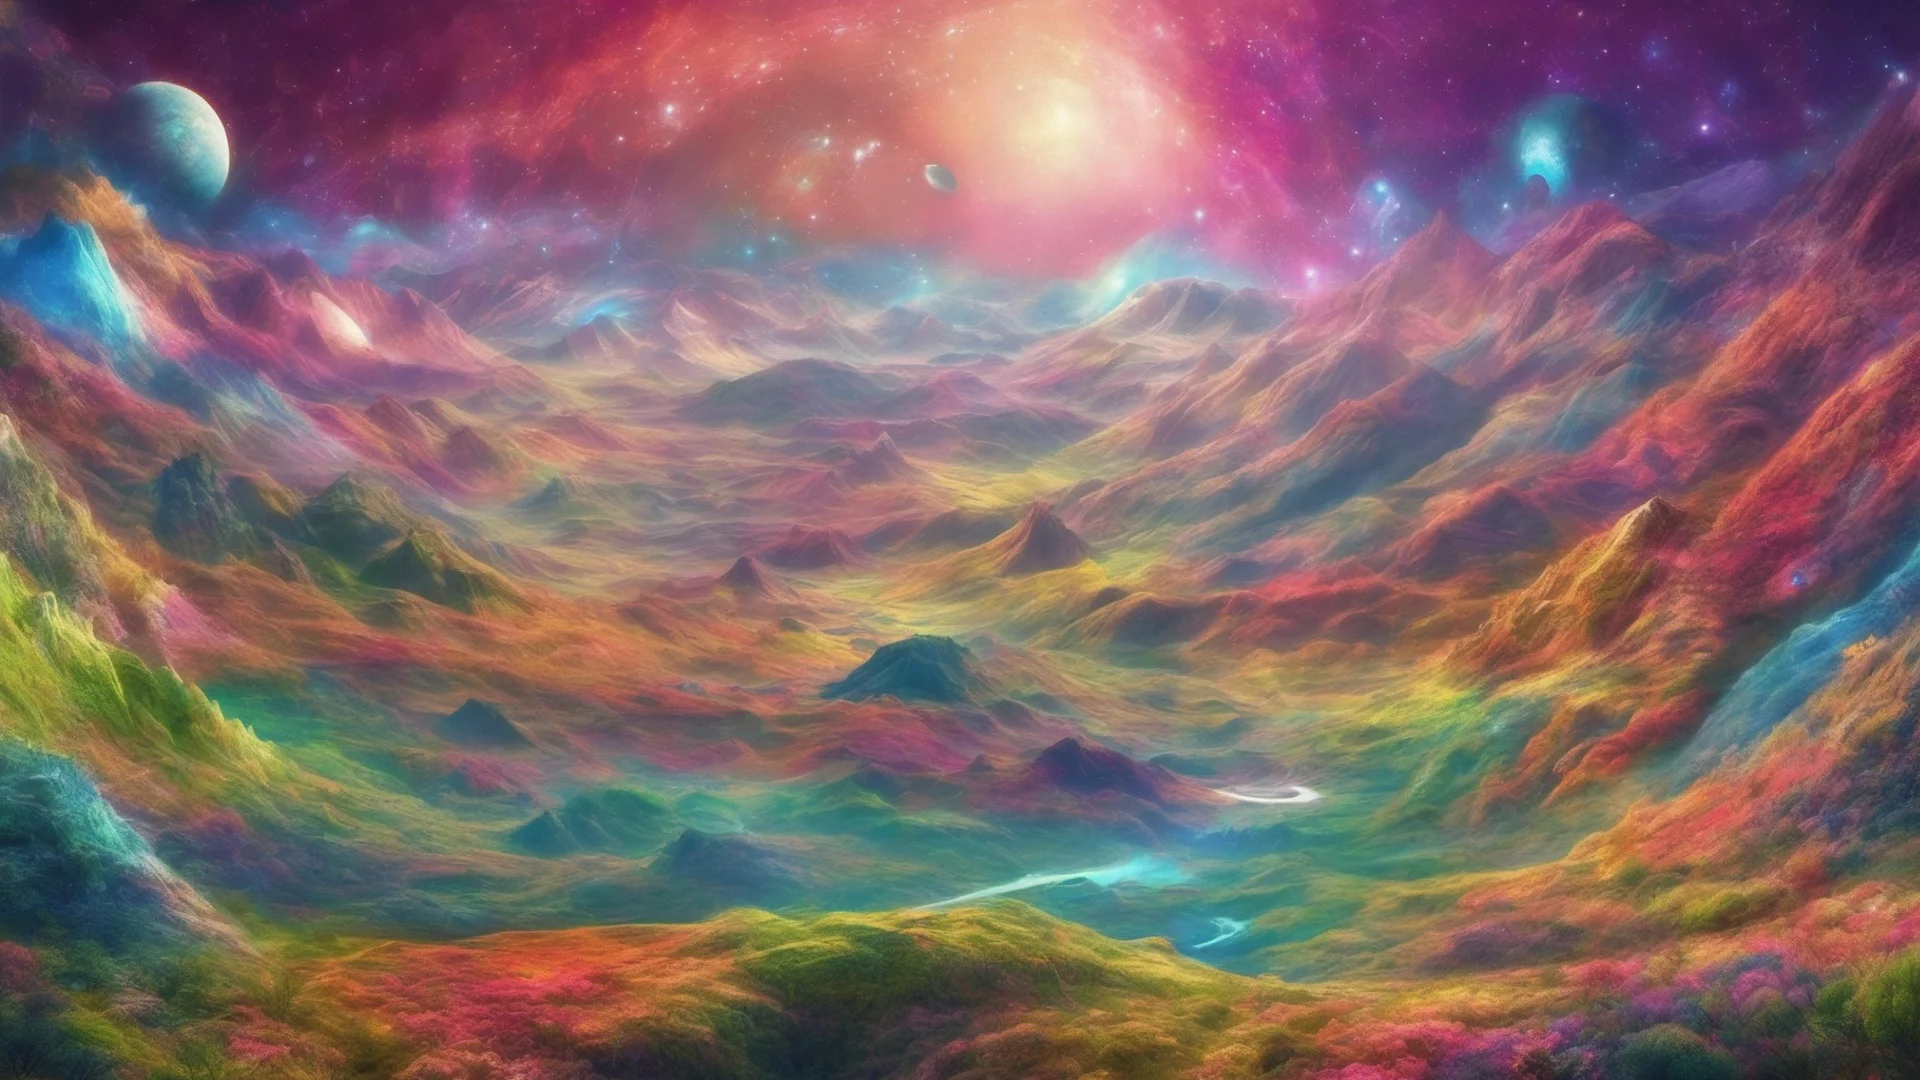 aihills valleys colorful fantasy universes galaxy visible good looking trending fantastic 1 wide